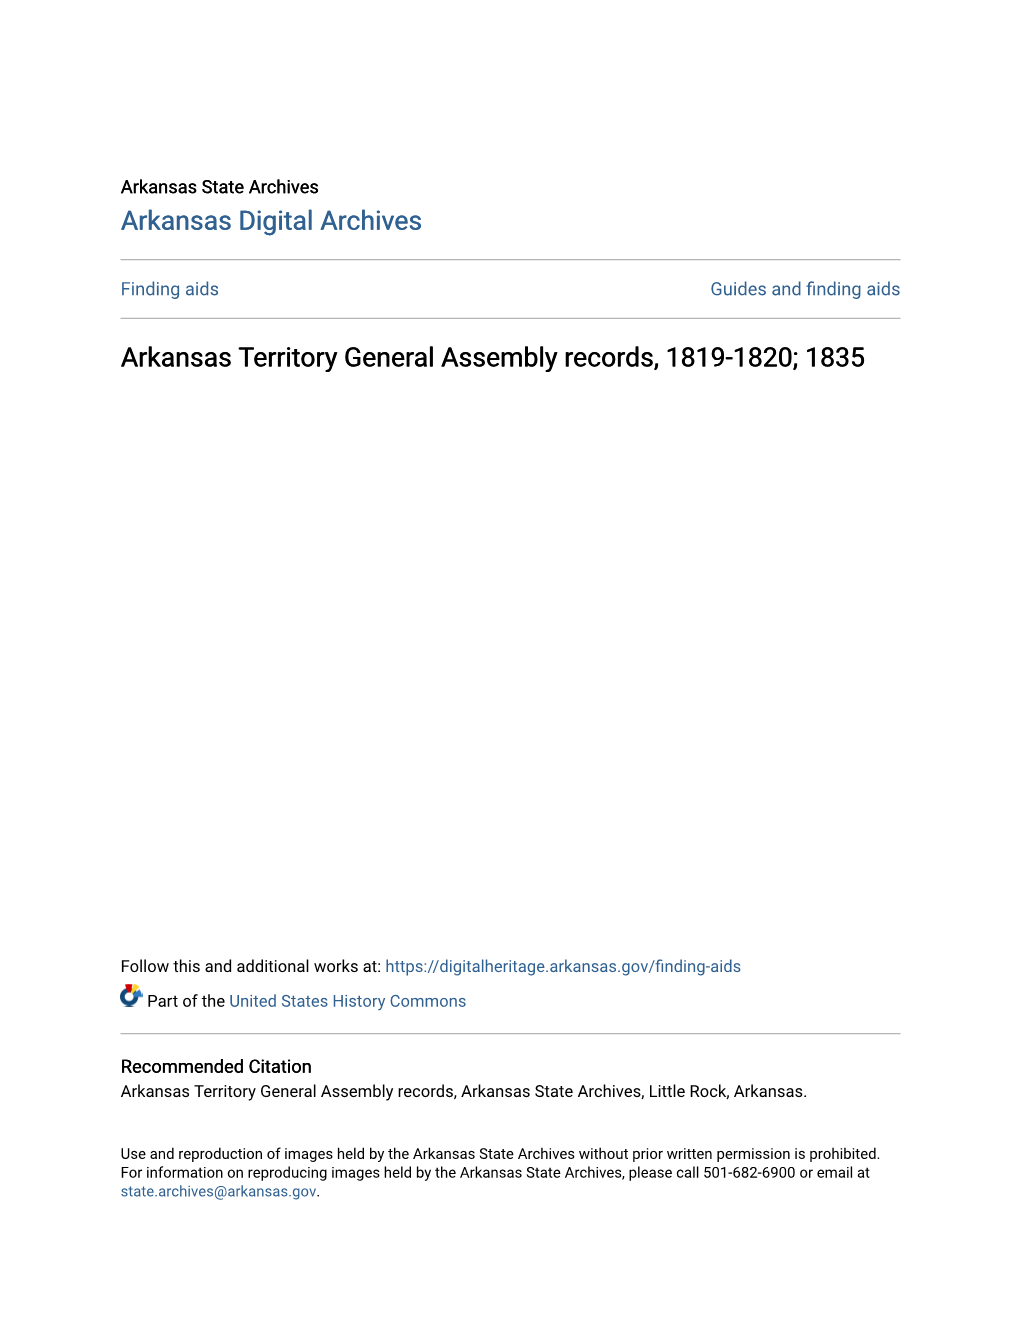 Arkansas Territory General Assembly Records, 1819-1820; 1835